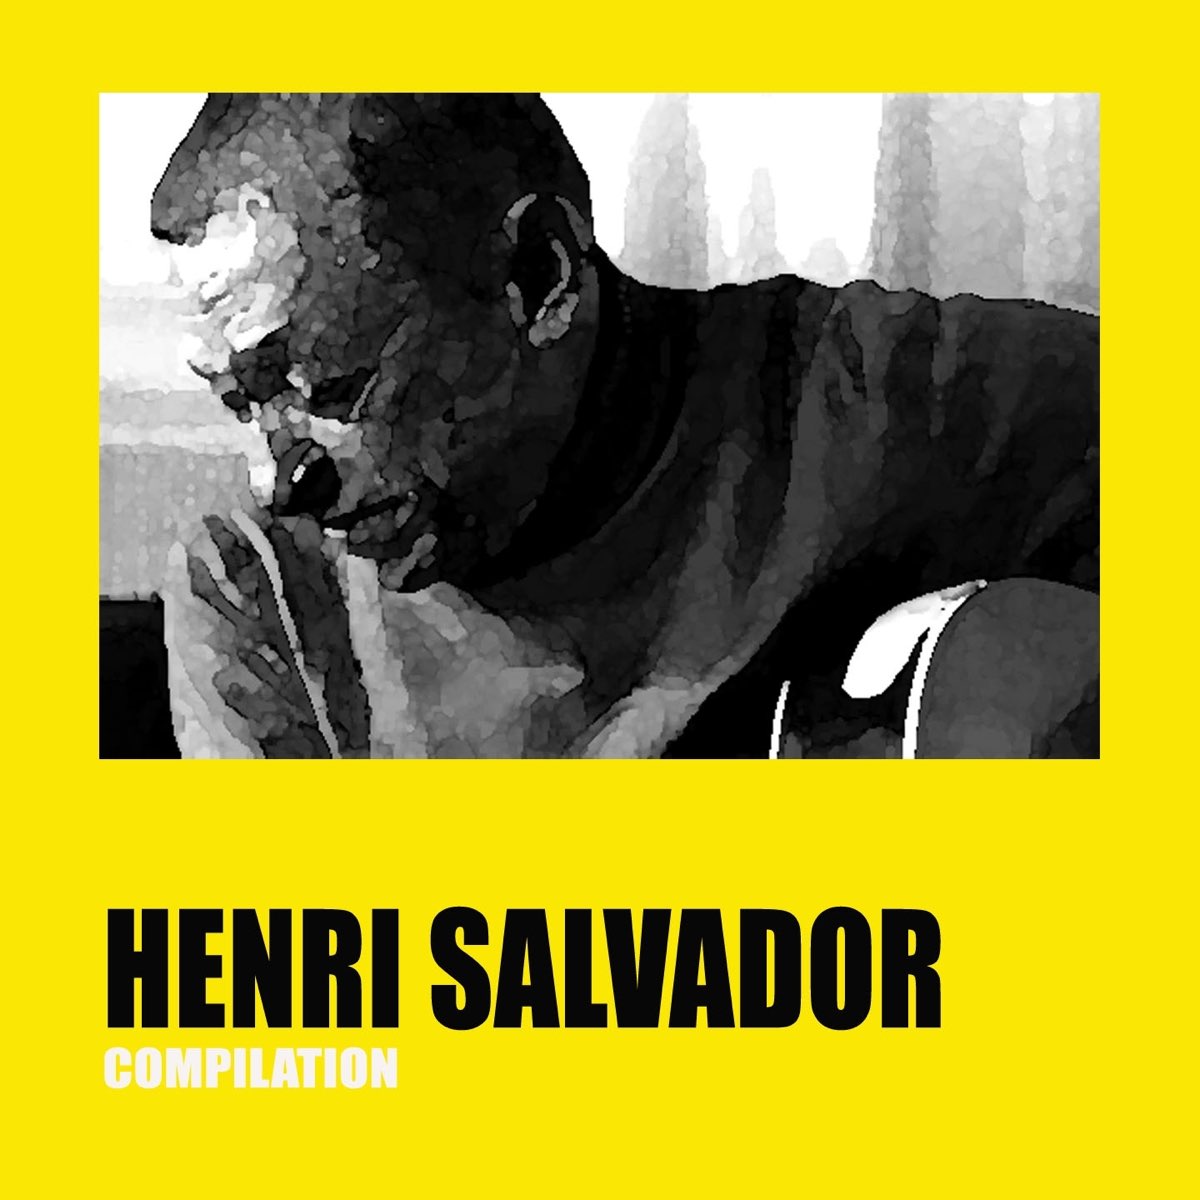 Henri Salvador Compilation by Henri Salvador on Apple Music